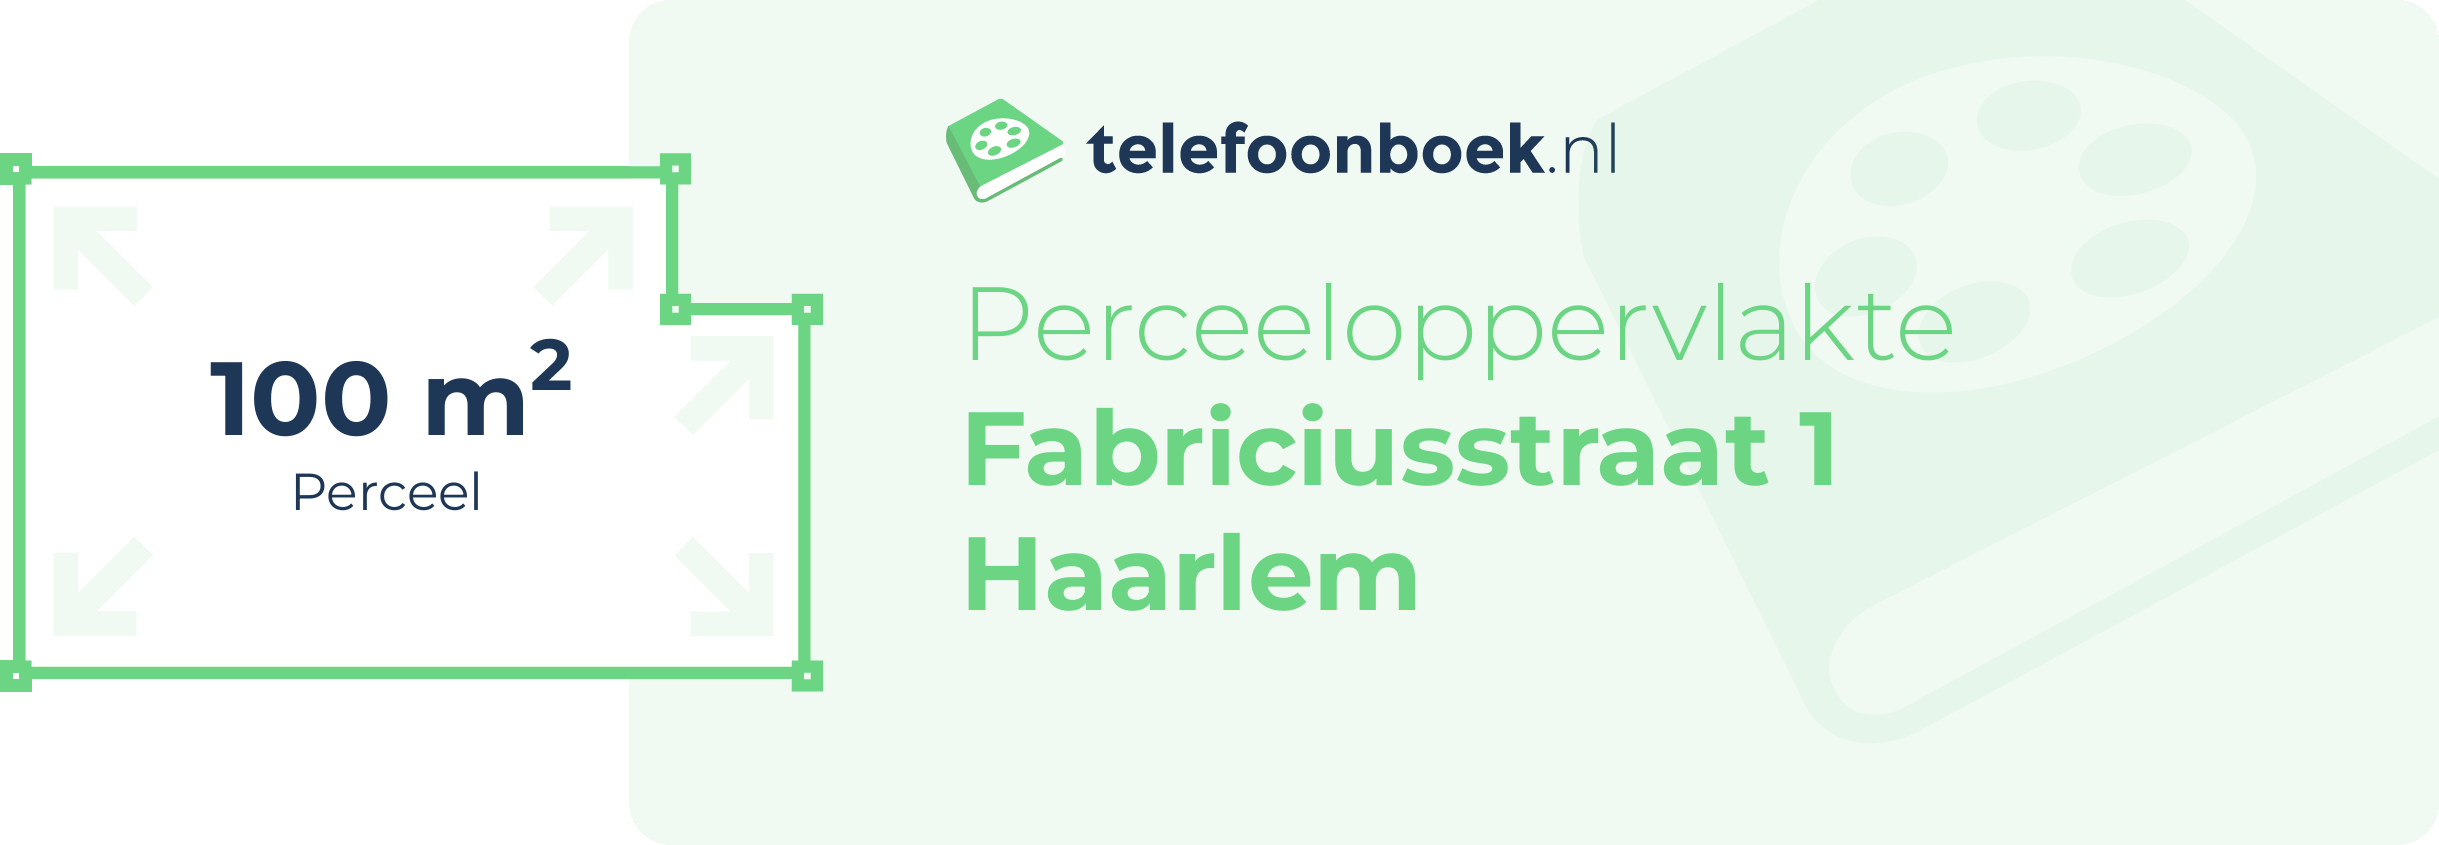 Perceeloppervlakte Fabriciusstraat 1 Haarlem